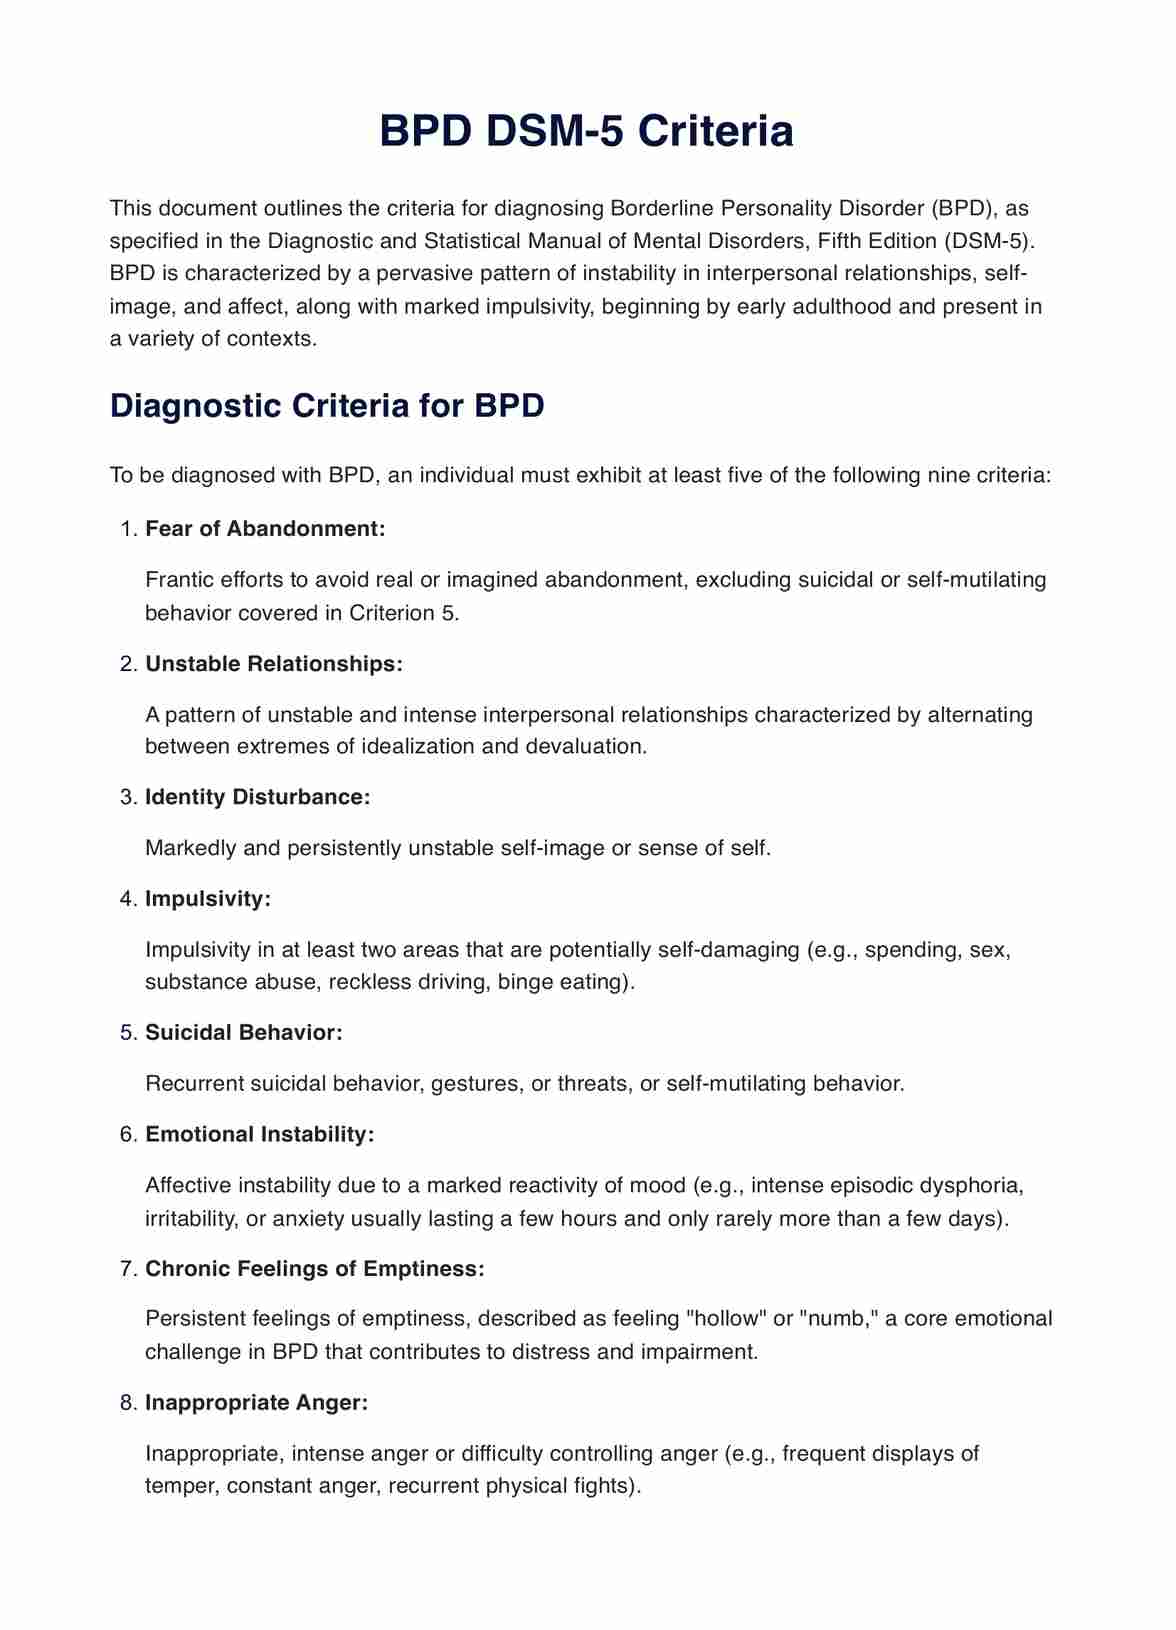 BPD DSM-5 Criteria PDF PDF Example